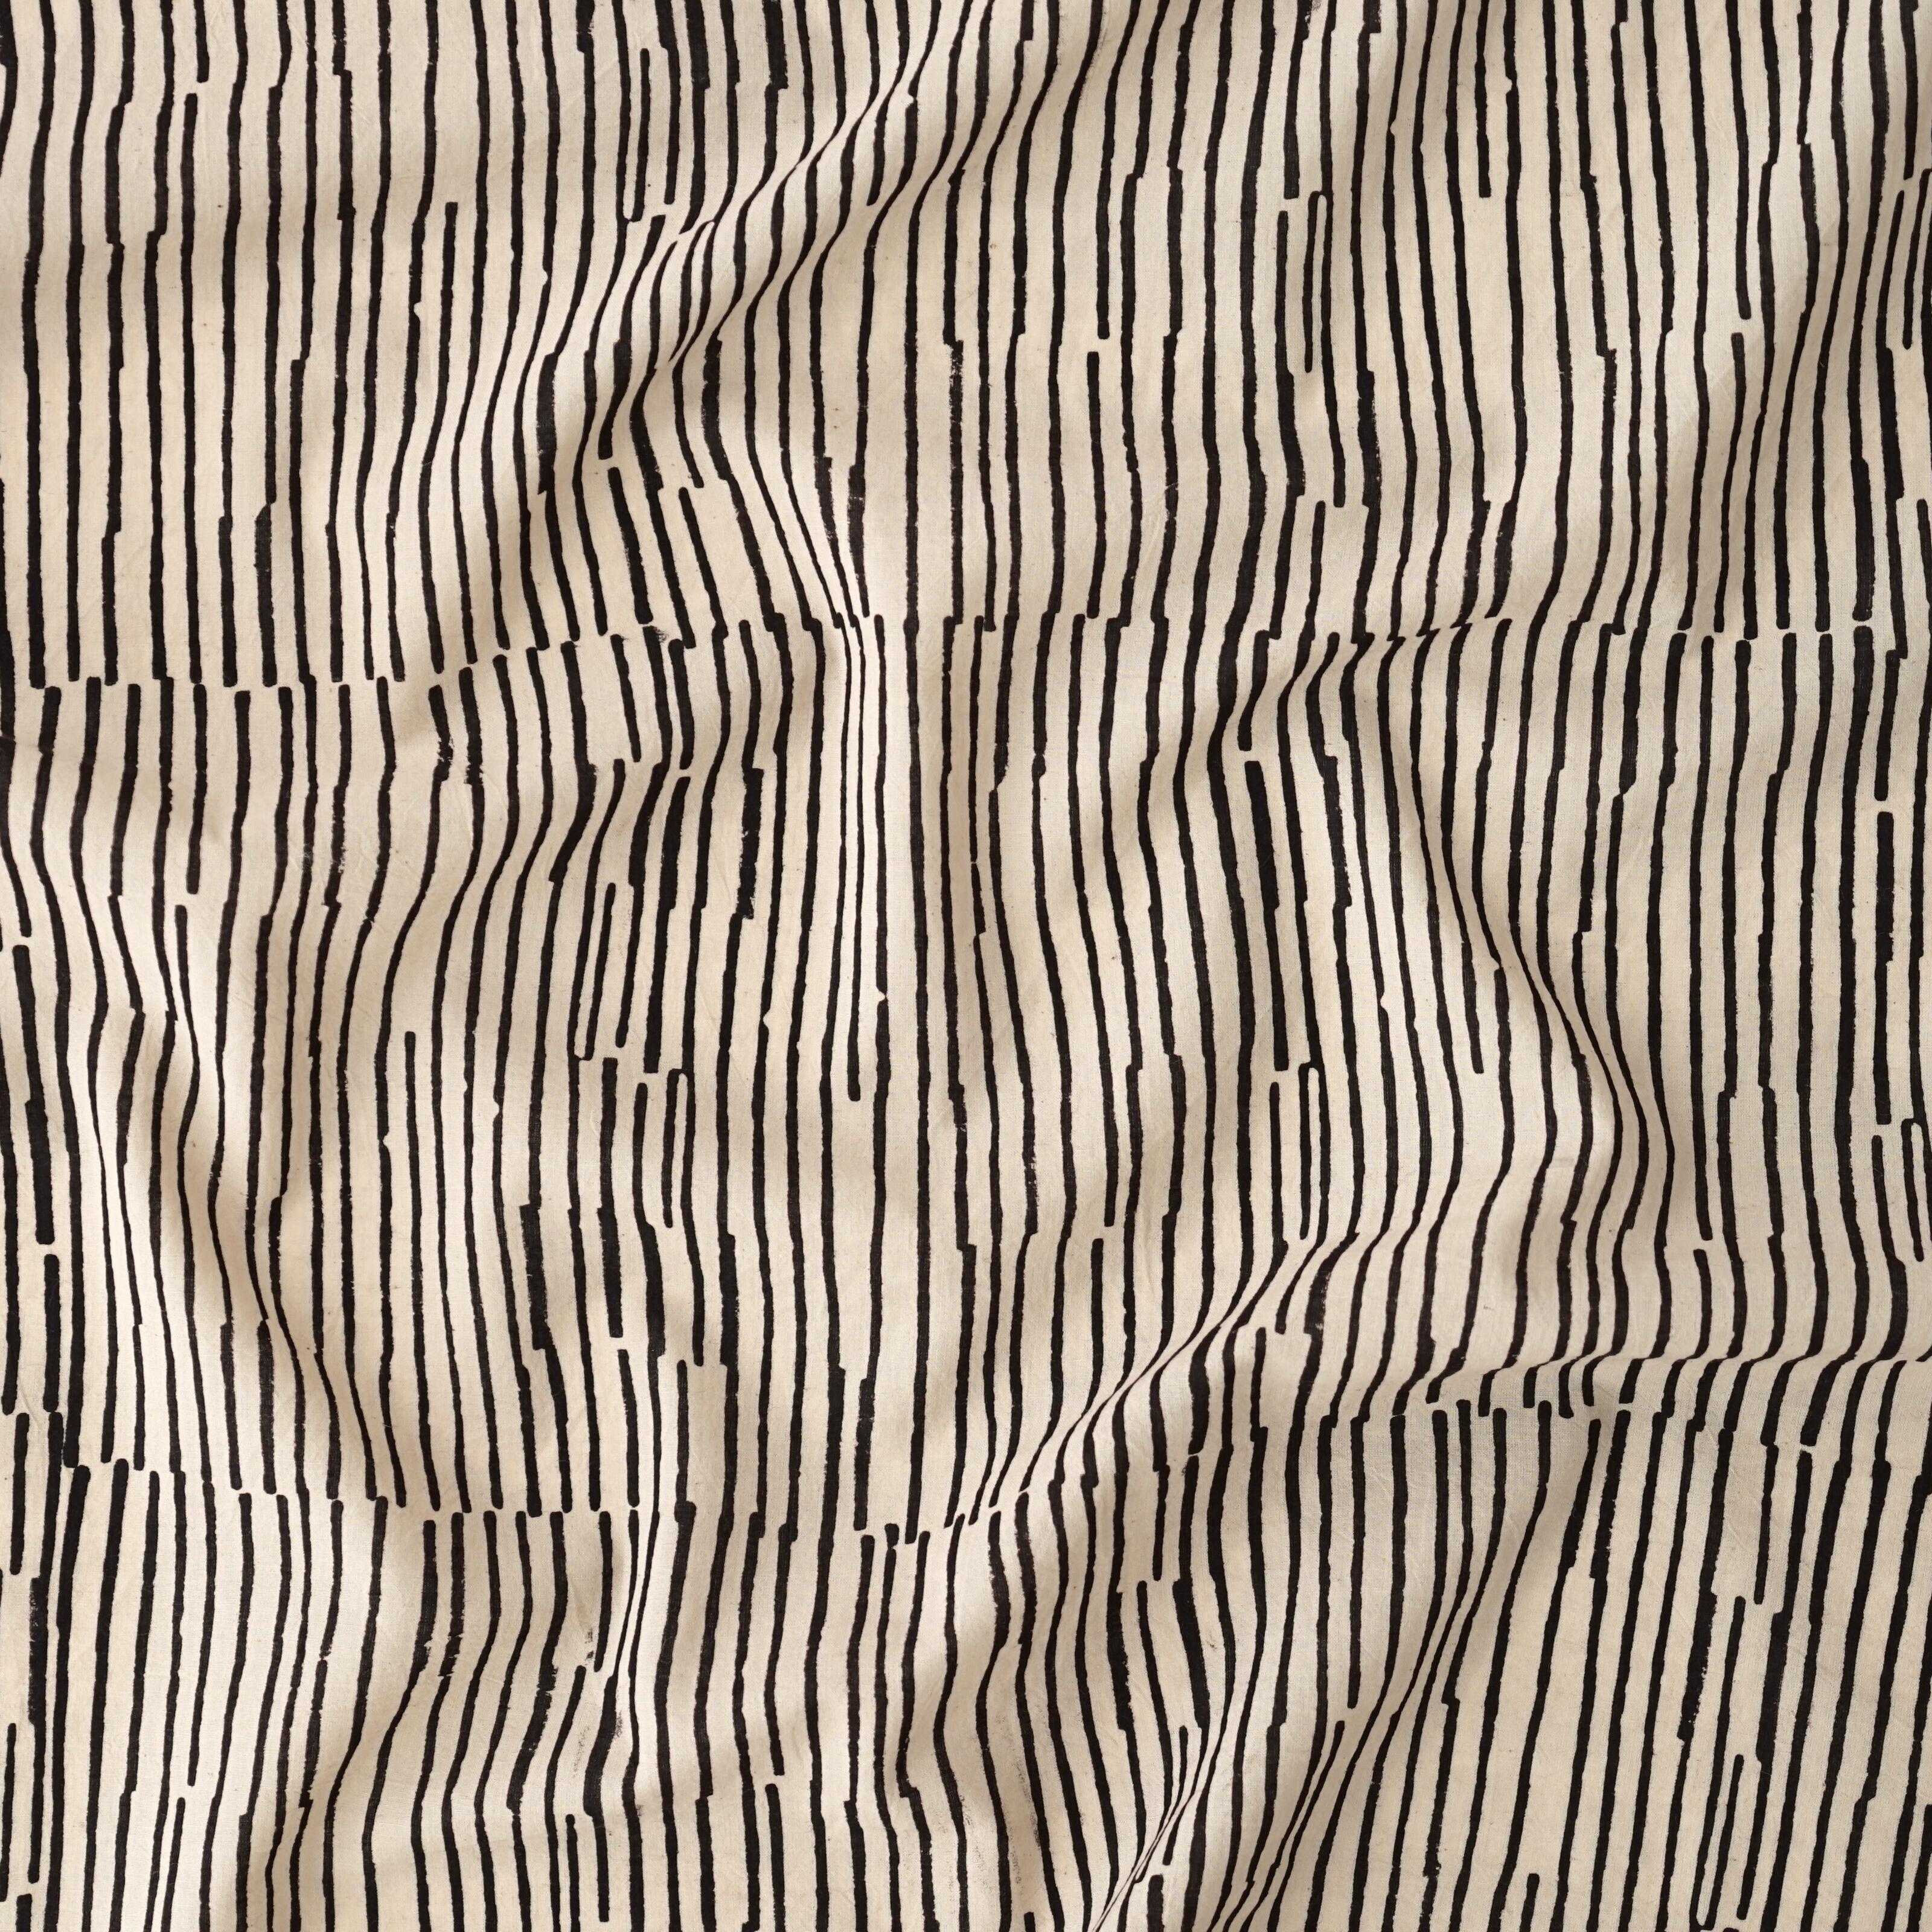 100% Block-Printed Cotton Fabric From India- Ajrak - Indigo Black Broken Lines Print - Contrast